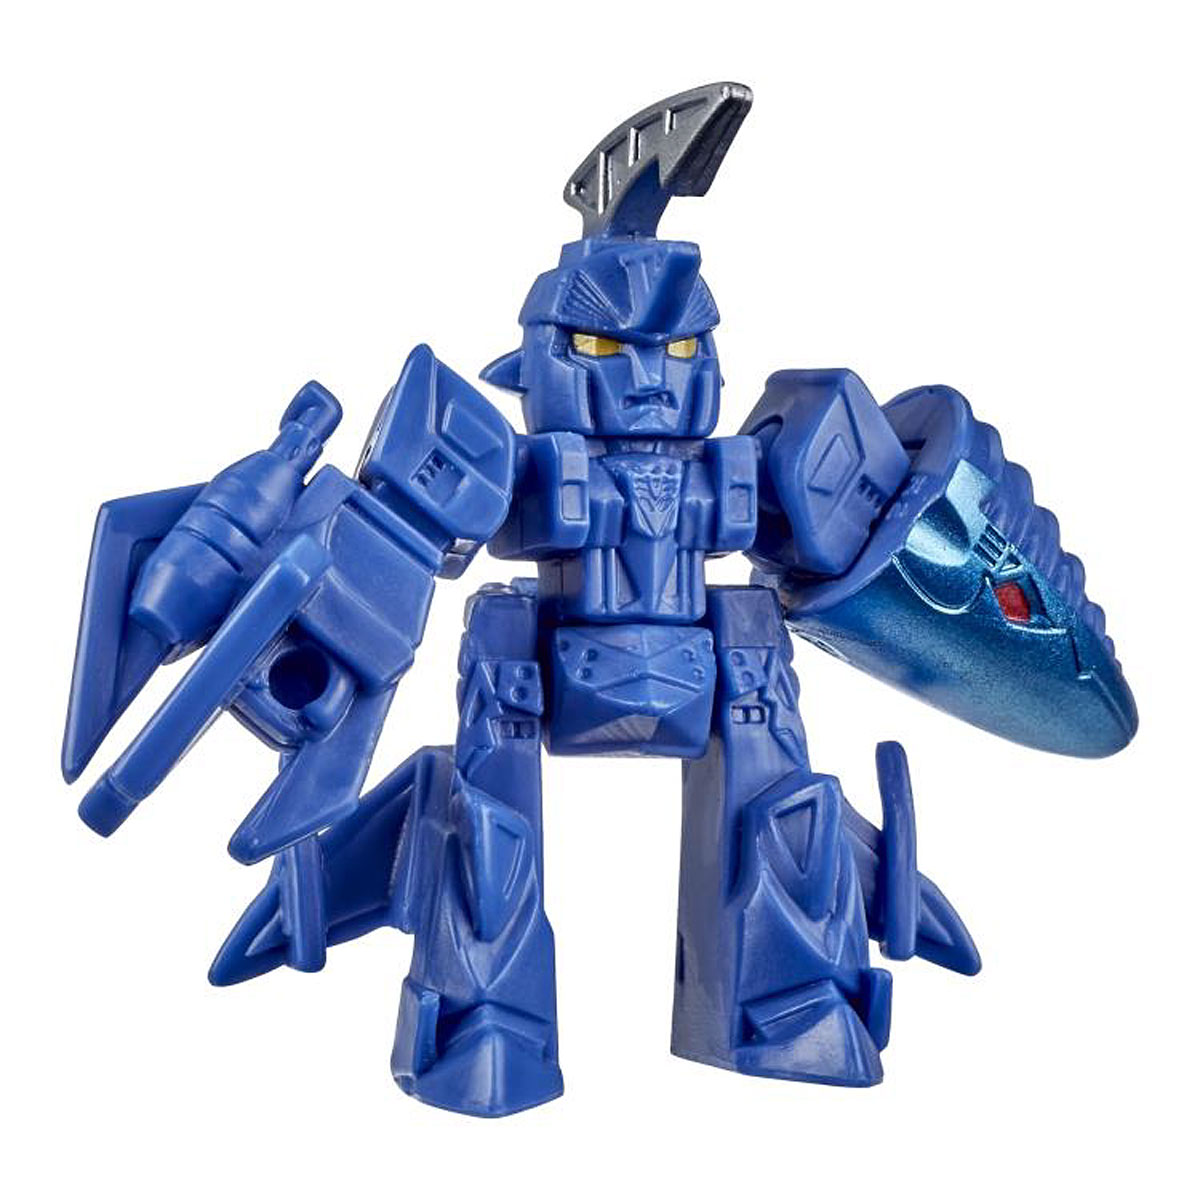 SKY-BYTE Transformers Cyberverse Tiny Turbo Changers Series 4 Hasbro 2020 New